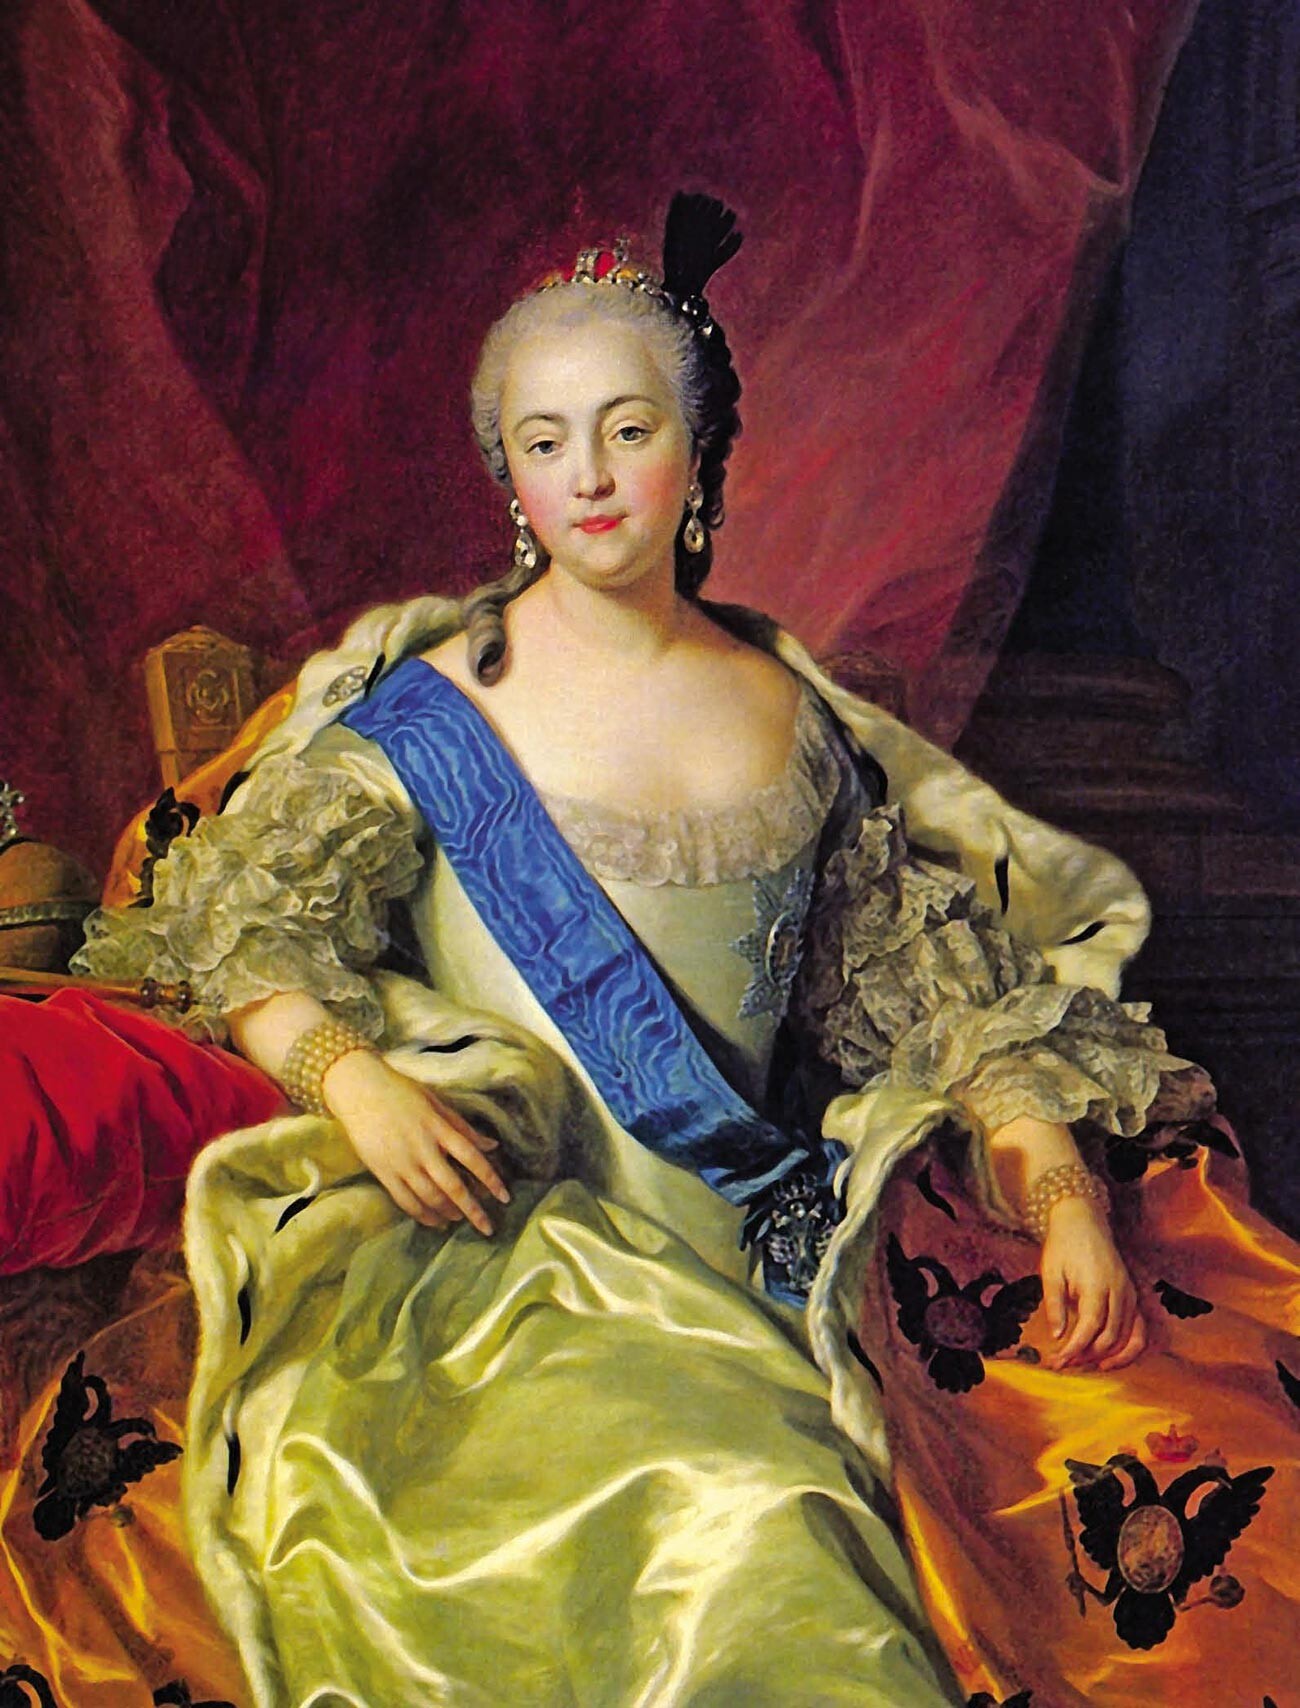 Empress Elizabeth by Charles-Andre van Loo, a parade portrait.